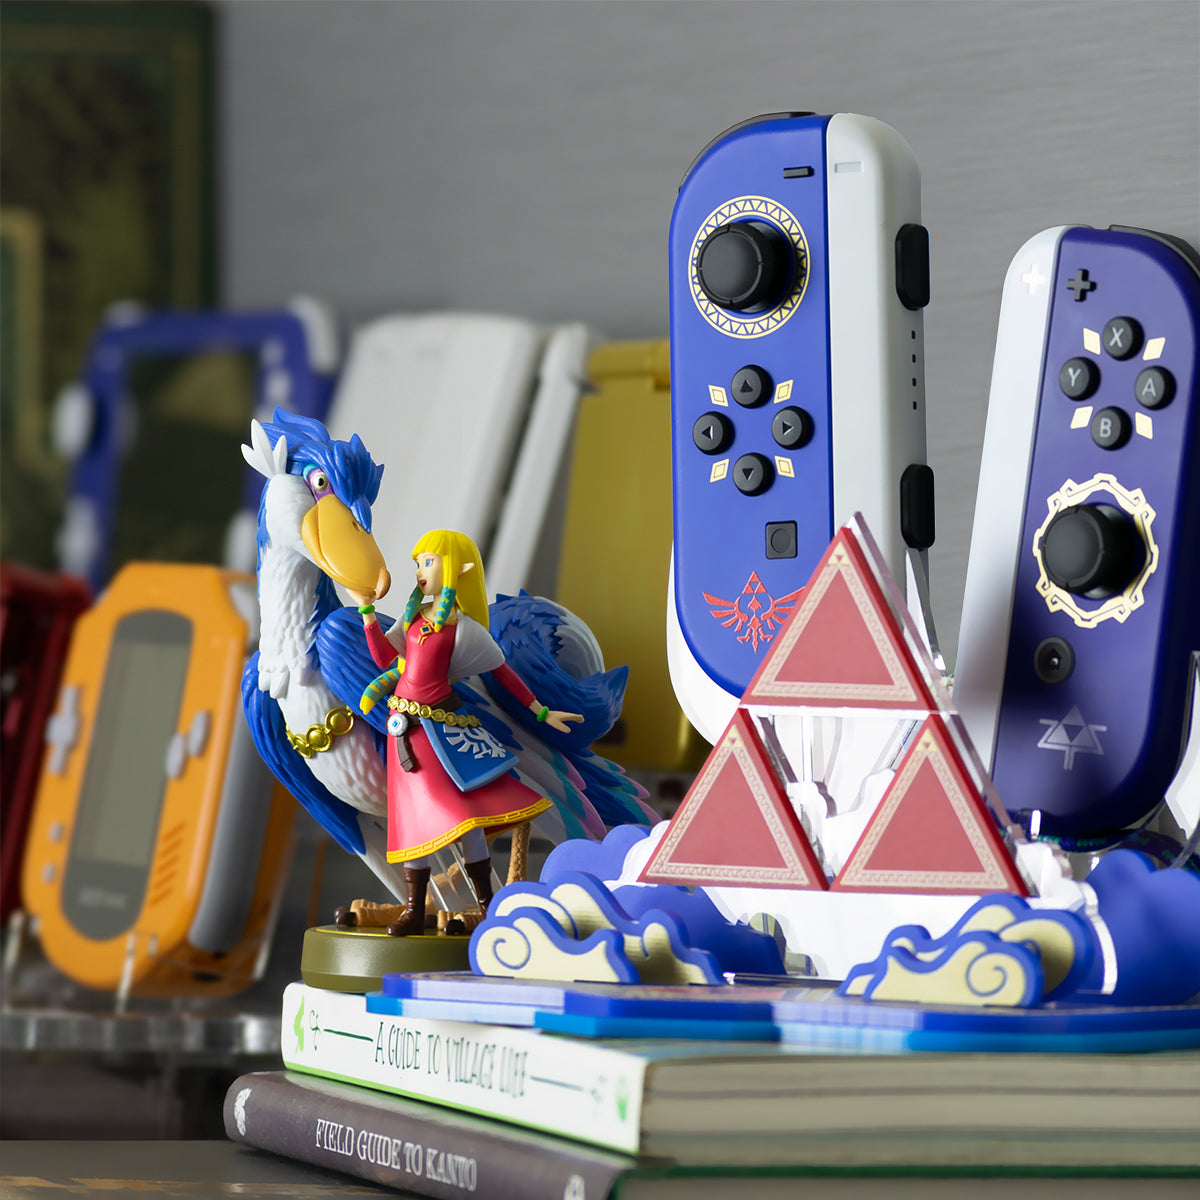 Nintendo Switch Joy-Con The Legend of Zelda Skyward Sword Edition